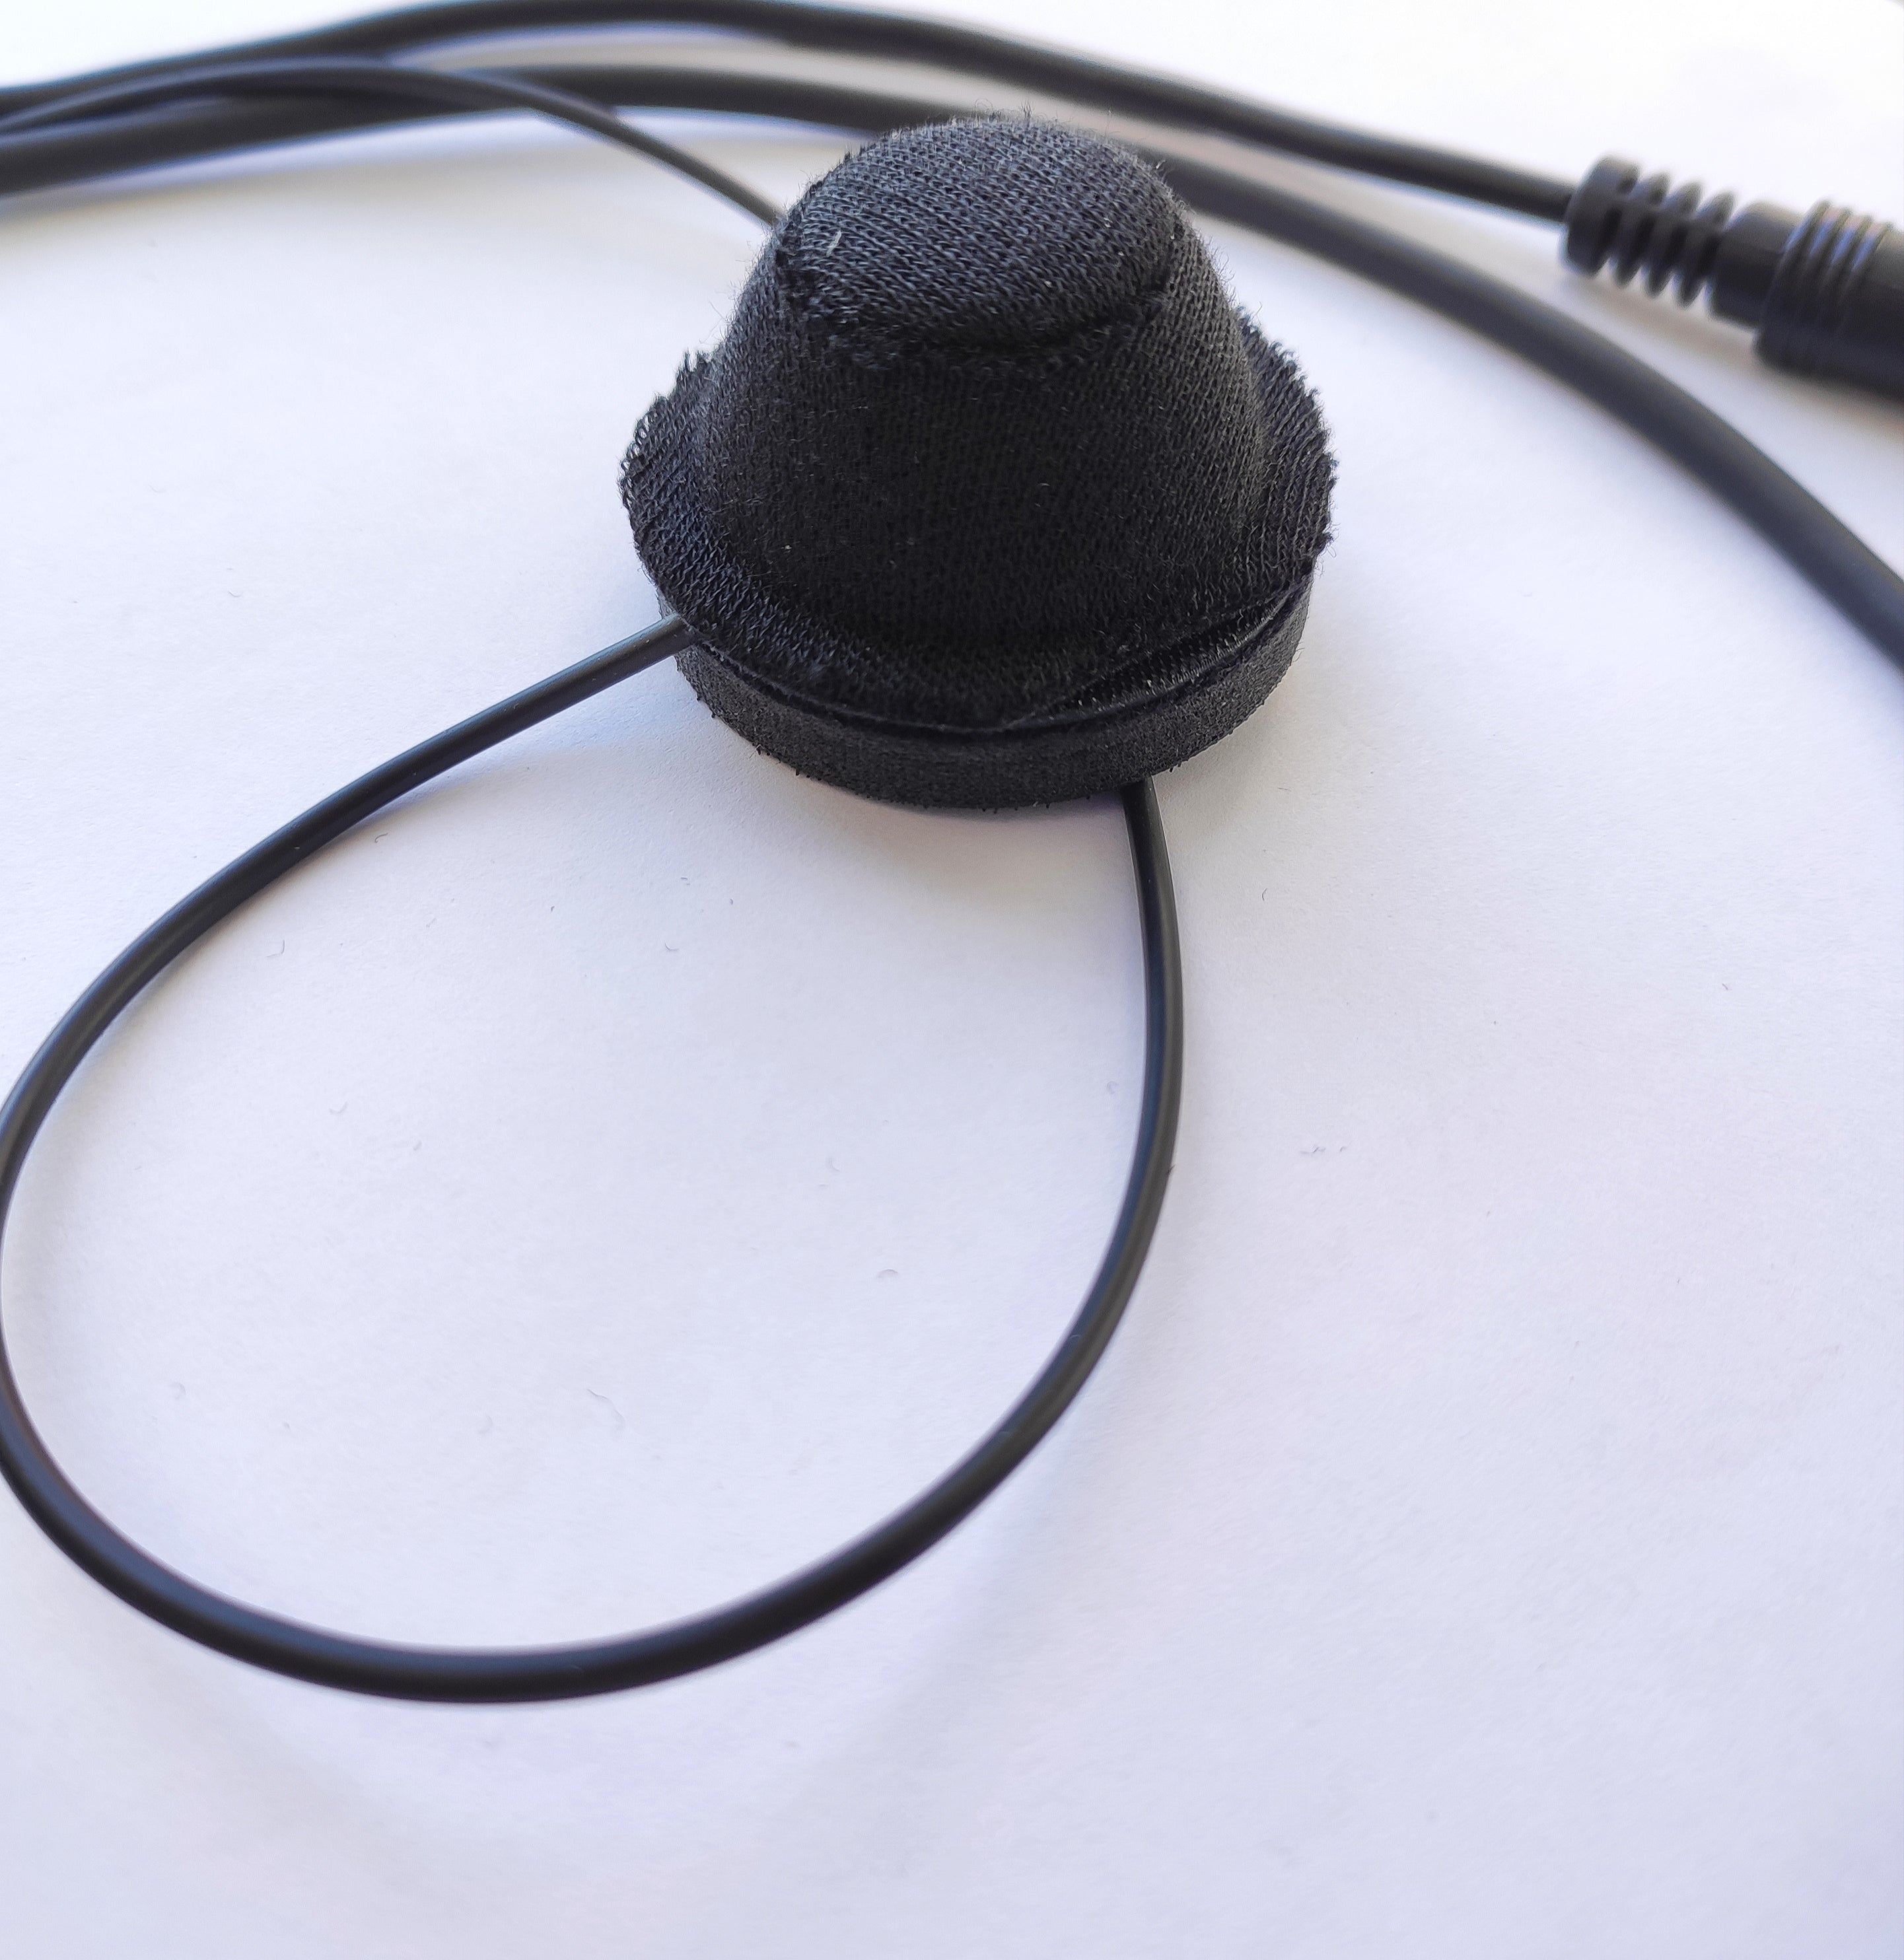 ZERONOISE 6300012 Radio helmet kit for Full Face helmet, Male Nexus 4 PIN, with 3.5mm stereo connector for earplugs Photo-2 